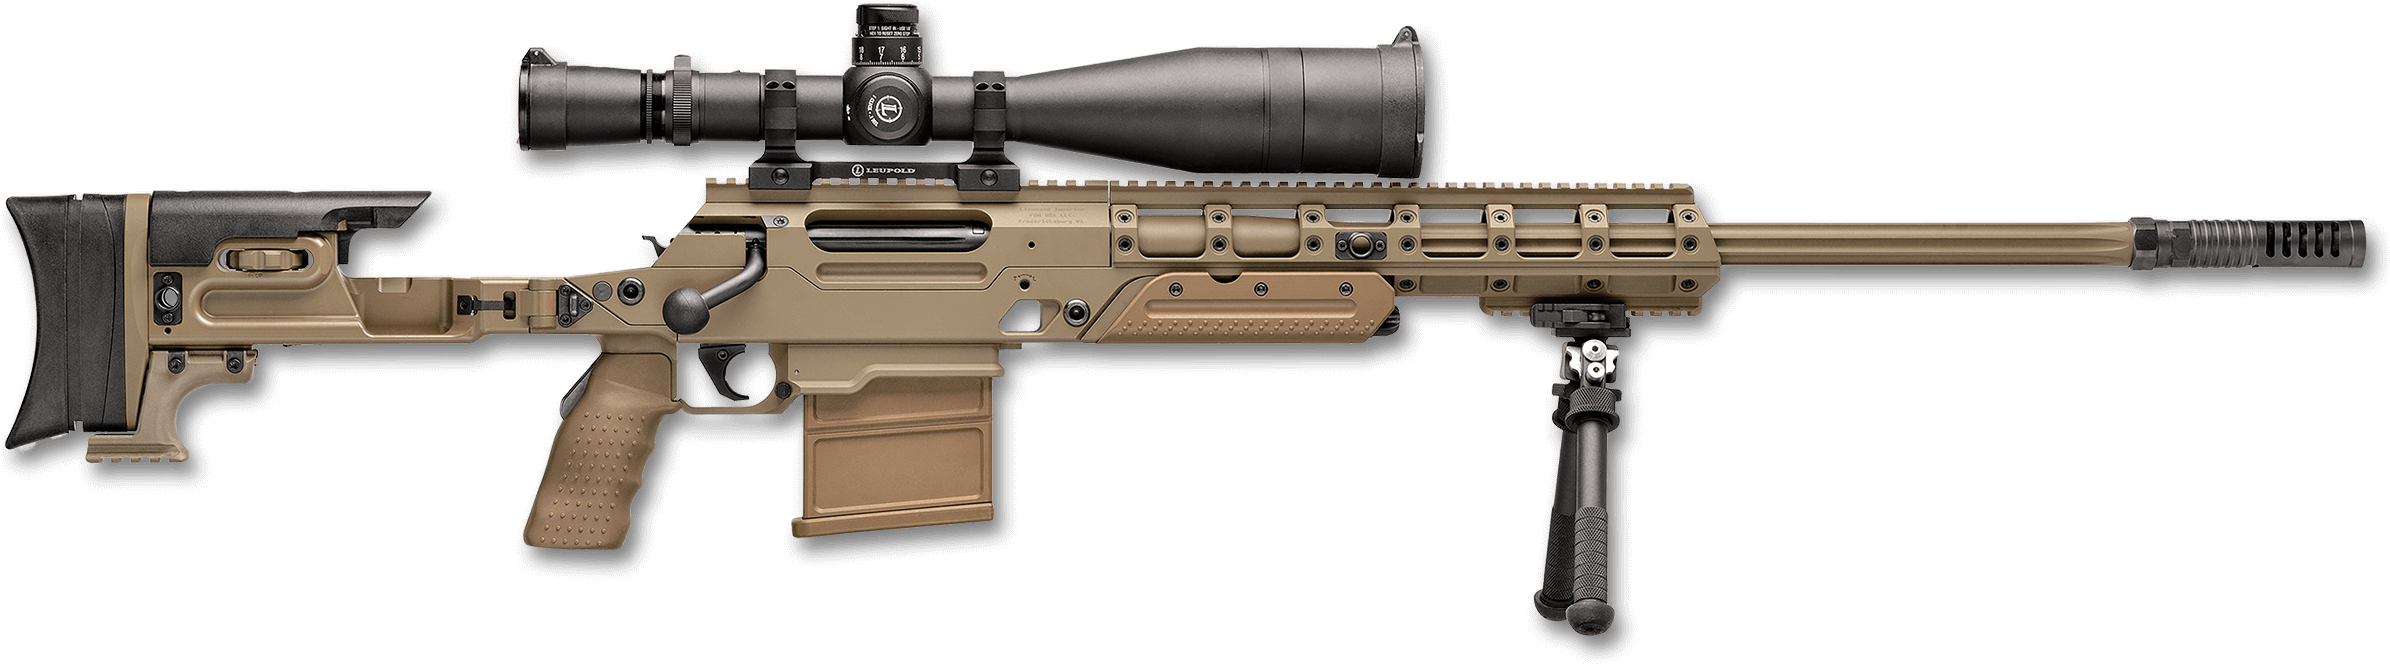 Sniper Rifle PNG HD Photos